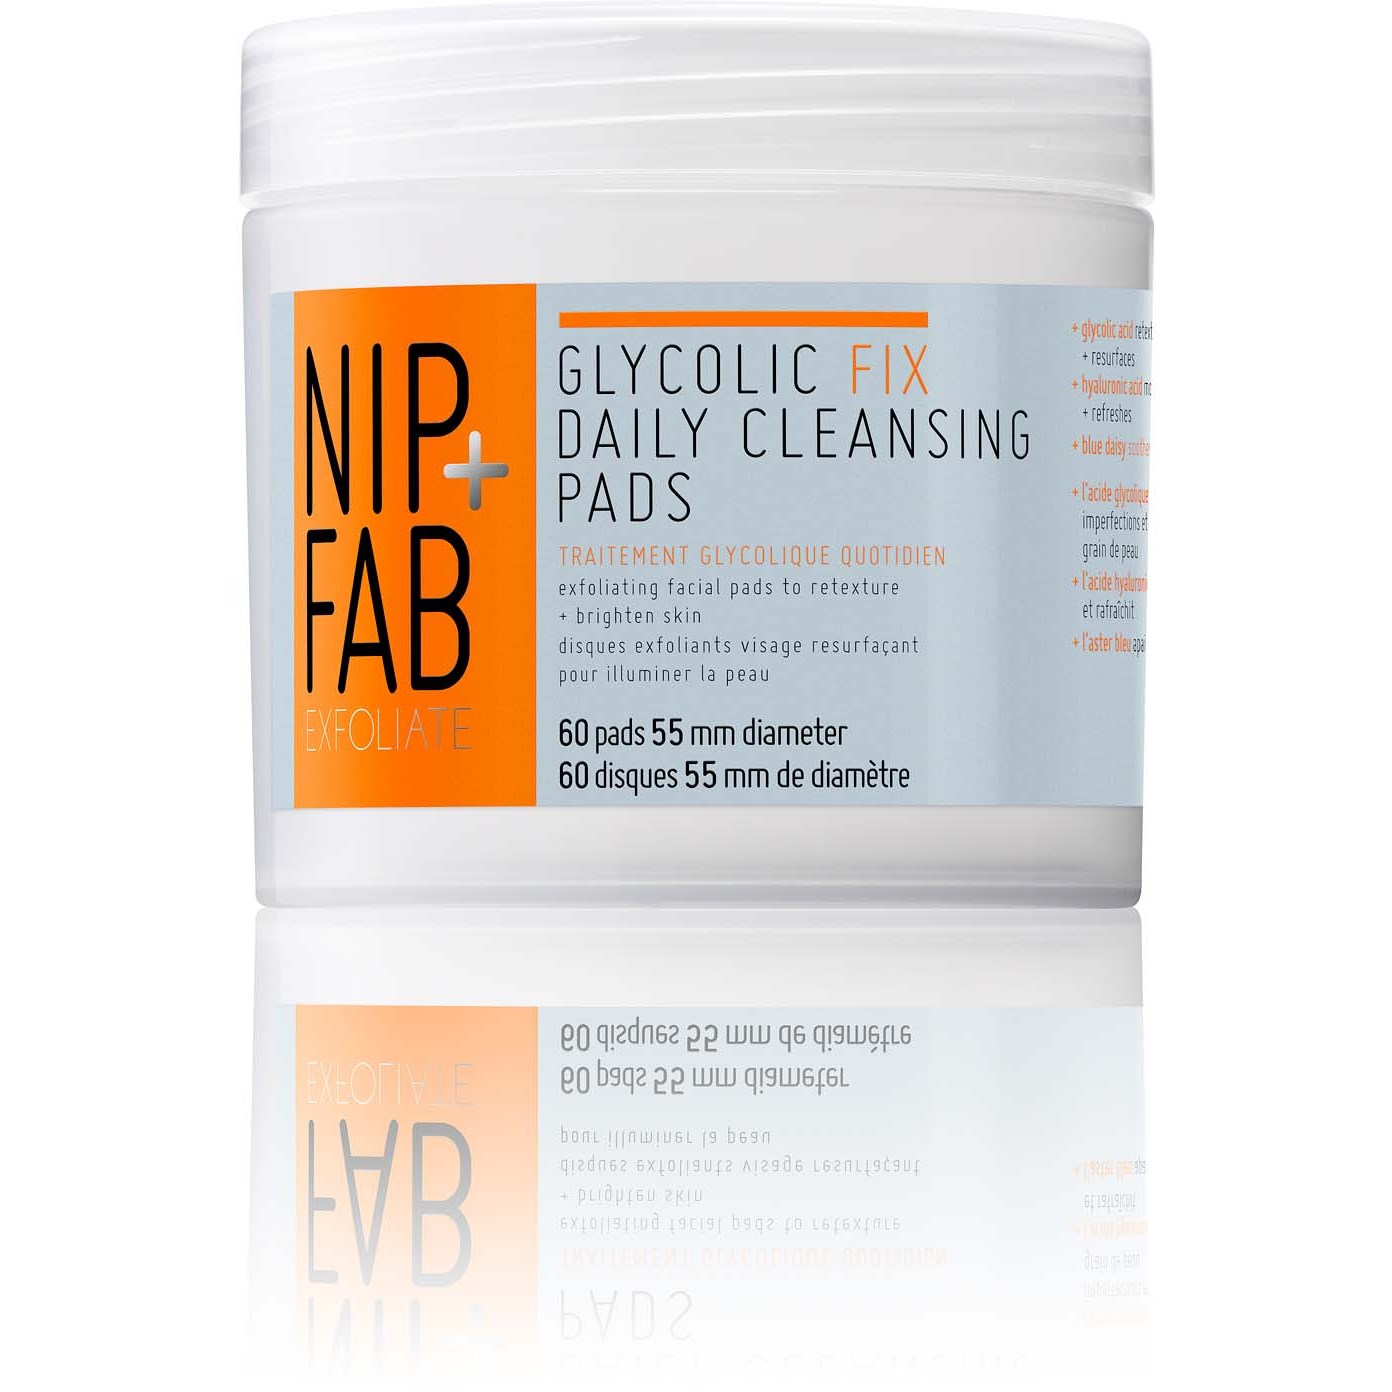 Läs mer om NIP+FAB Exfoliate Glycolic Fix Daily Cleansing Pads 60 pcs